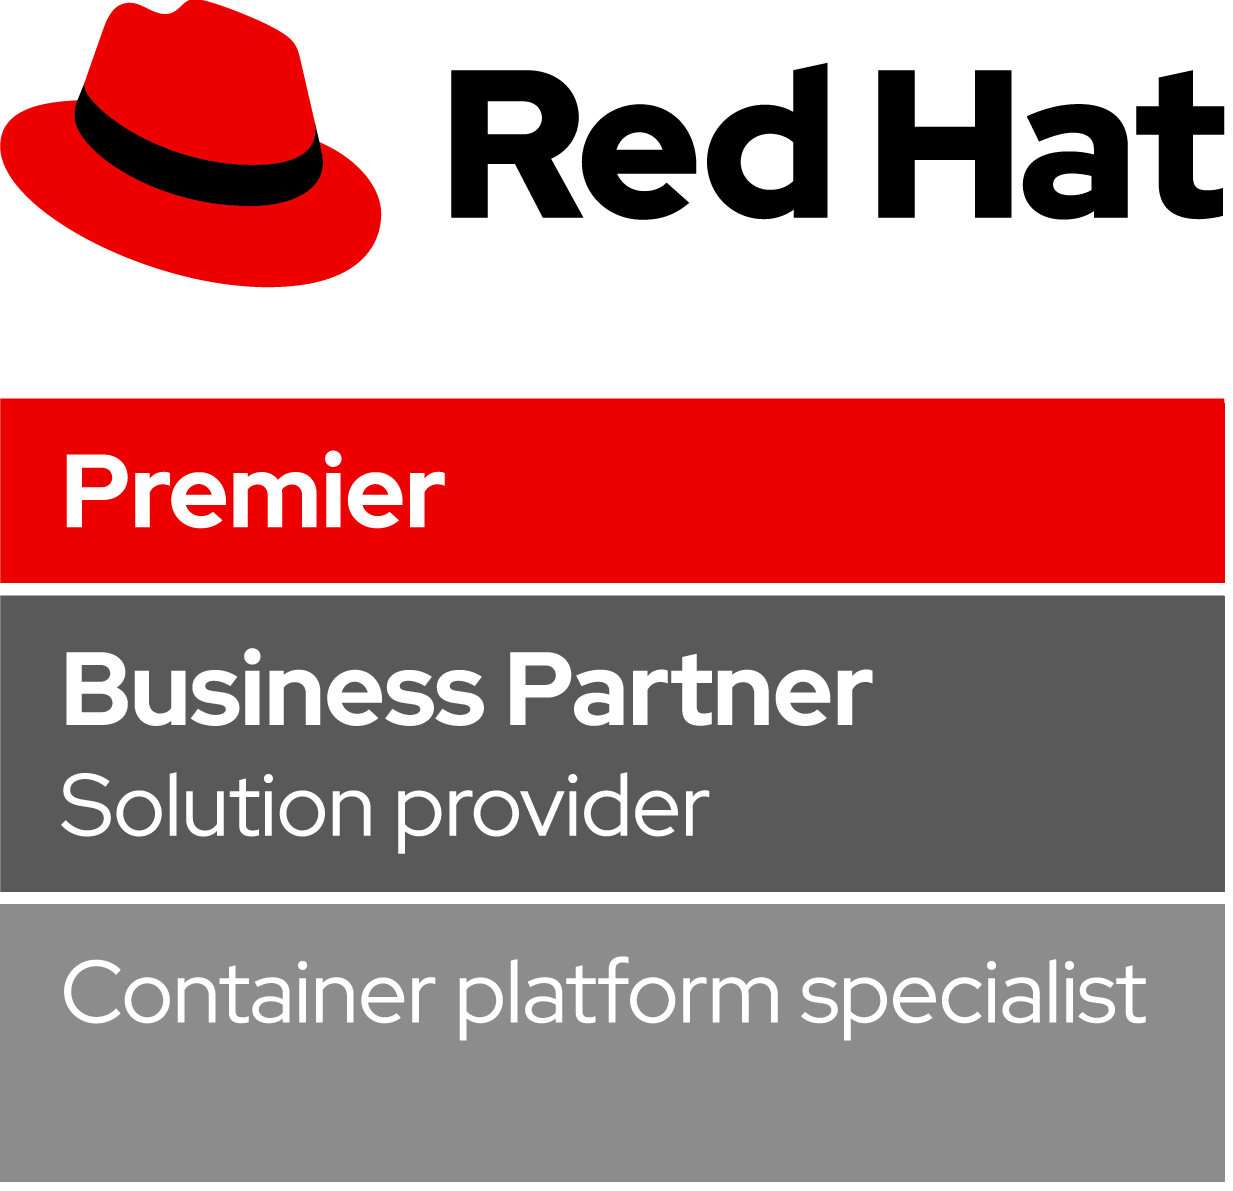 Logo-Red_Hat-Premier_Bus_Partner-Sol_Prov-Container_platform_specialist-A-Standard-RGB